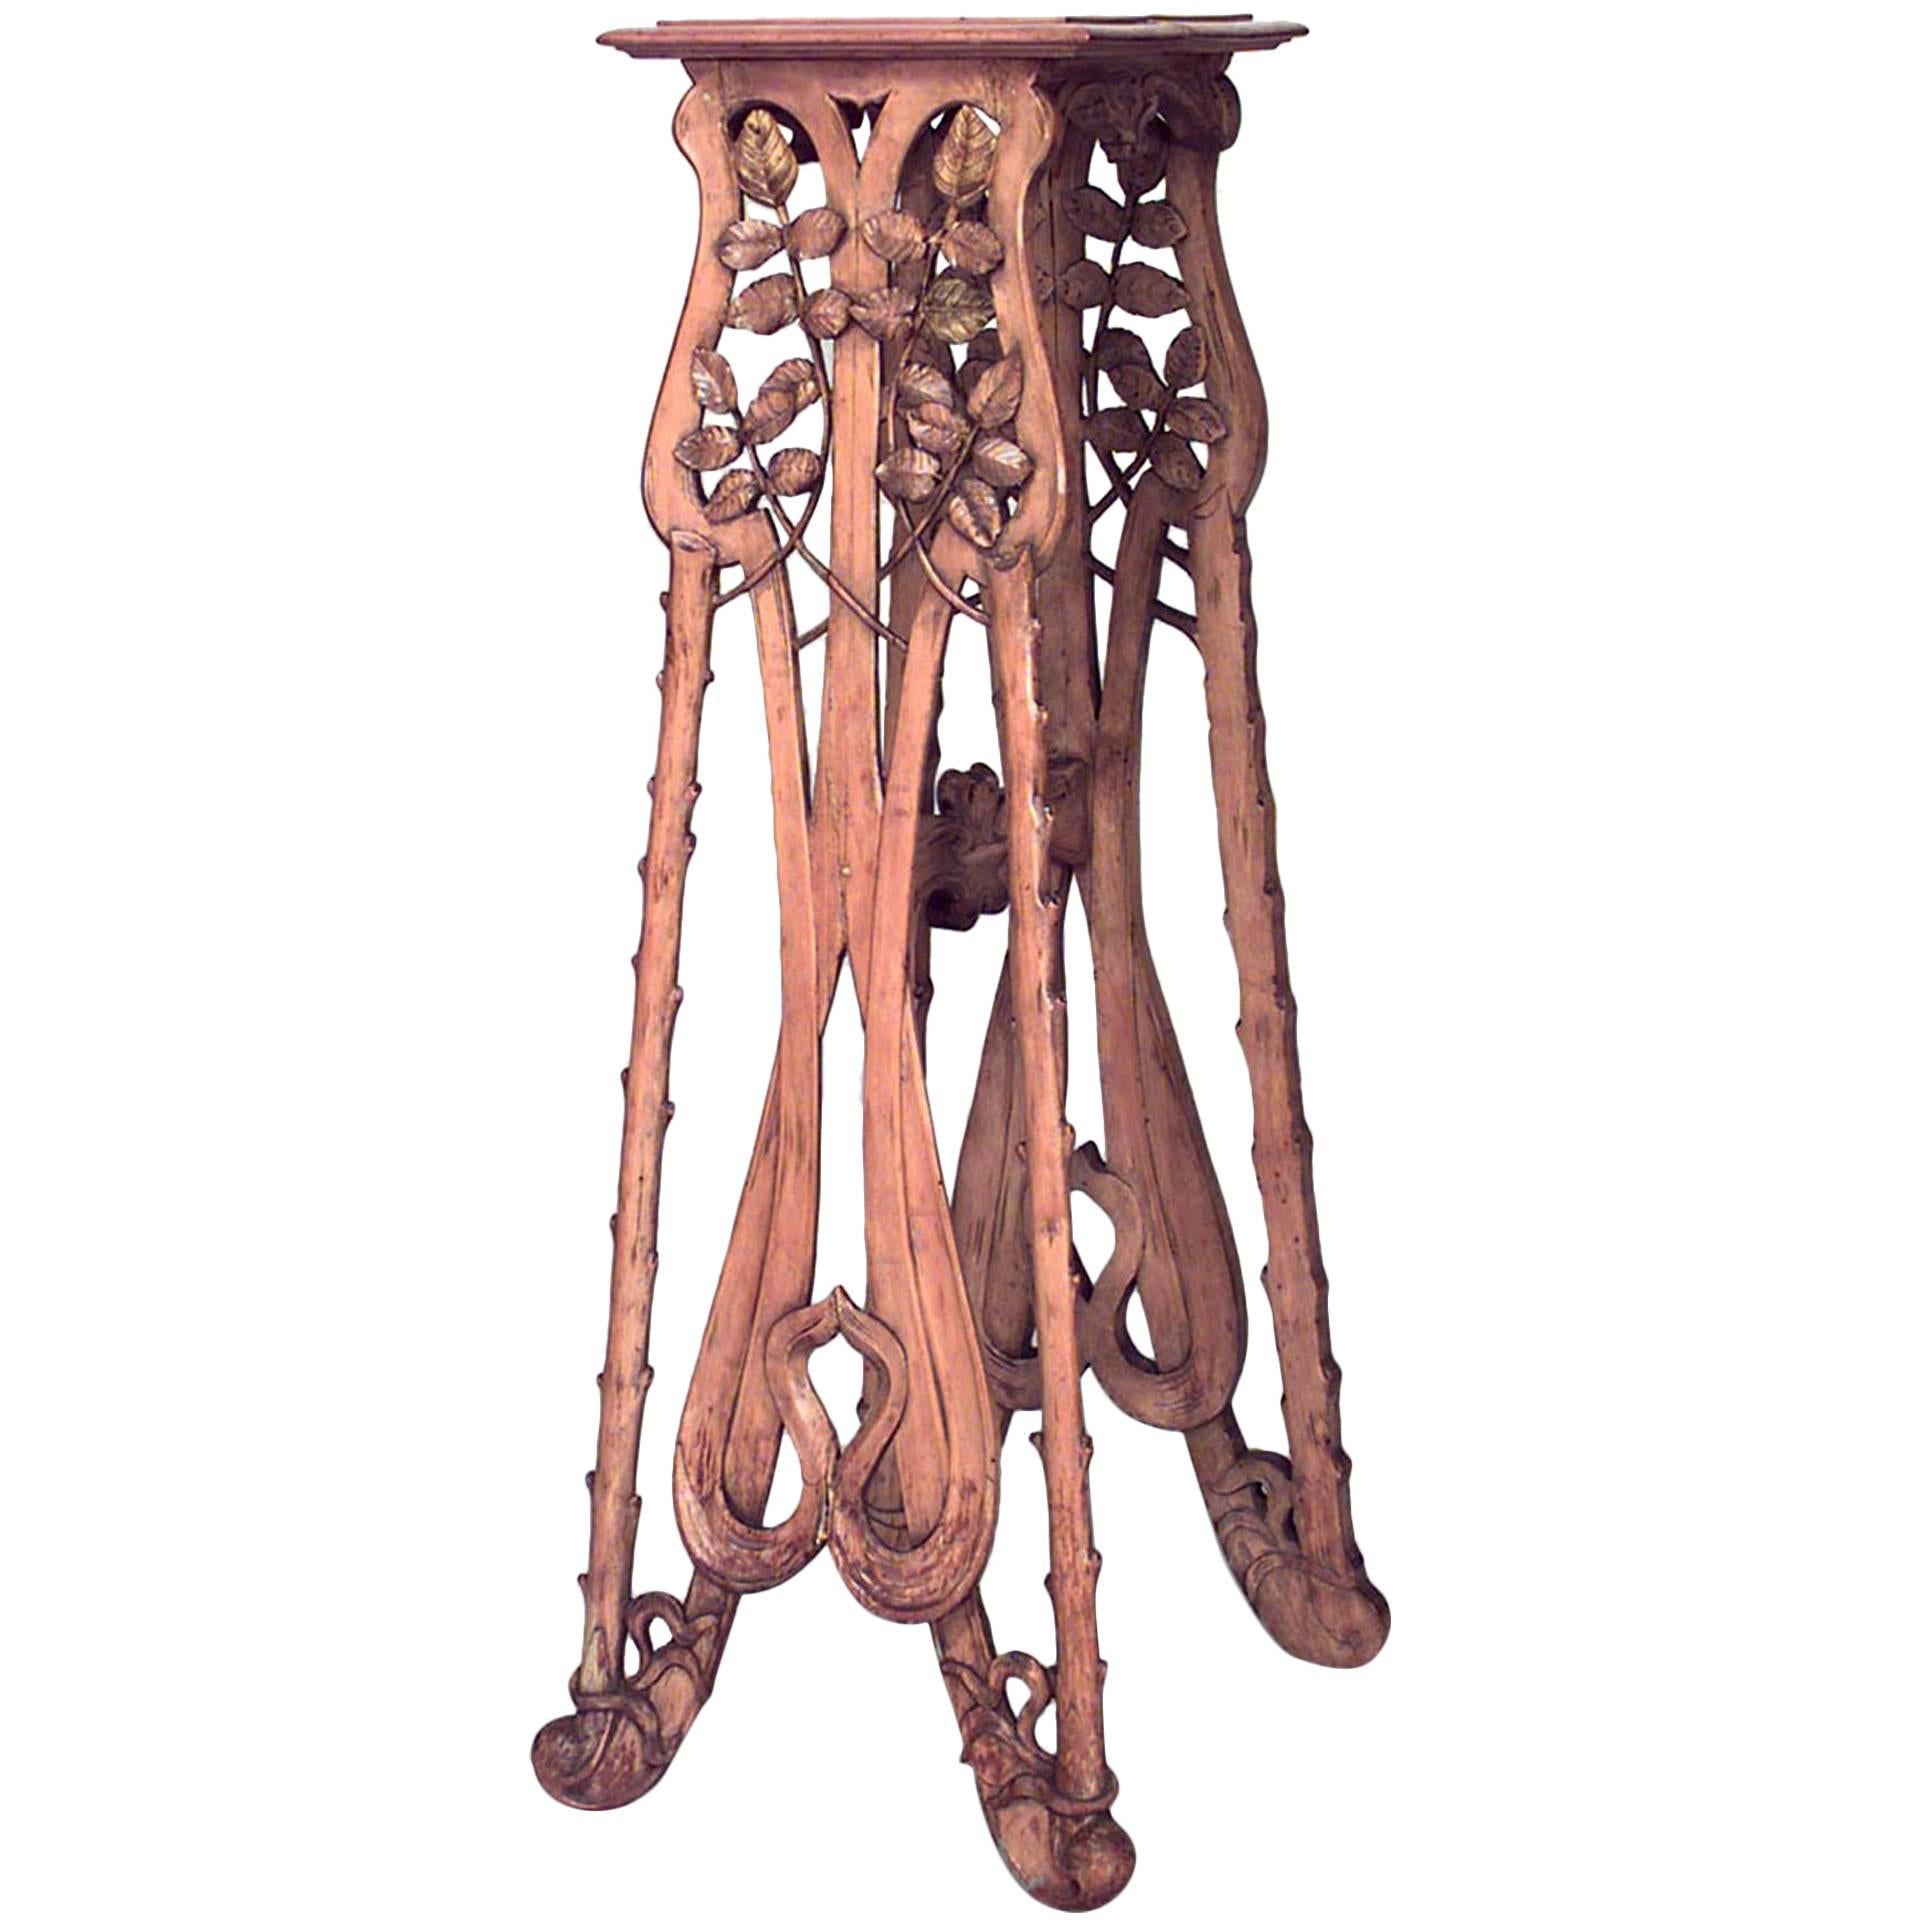 French Art Nouveau Filigree Pedestal